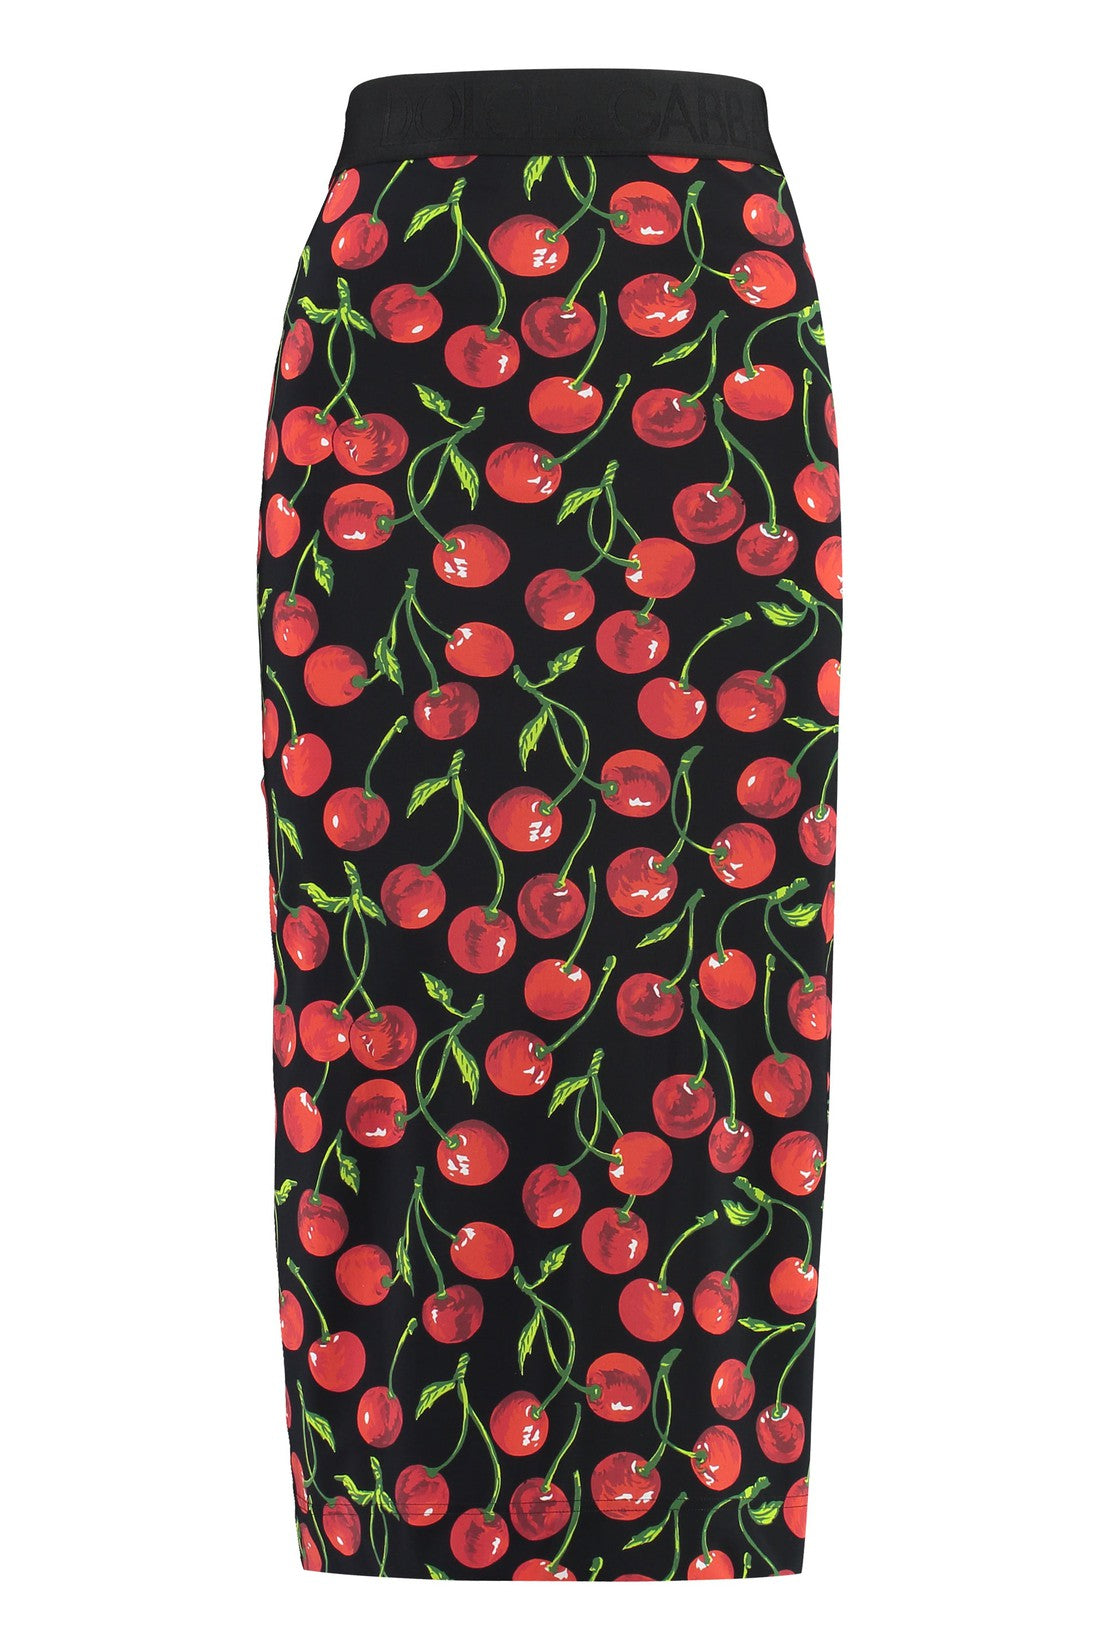 Dolce & Gabbana-OUTLET-SALE-Printed pencil skirt-ARCHIVIST